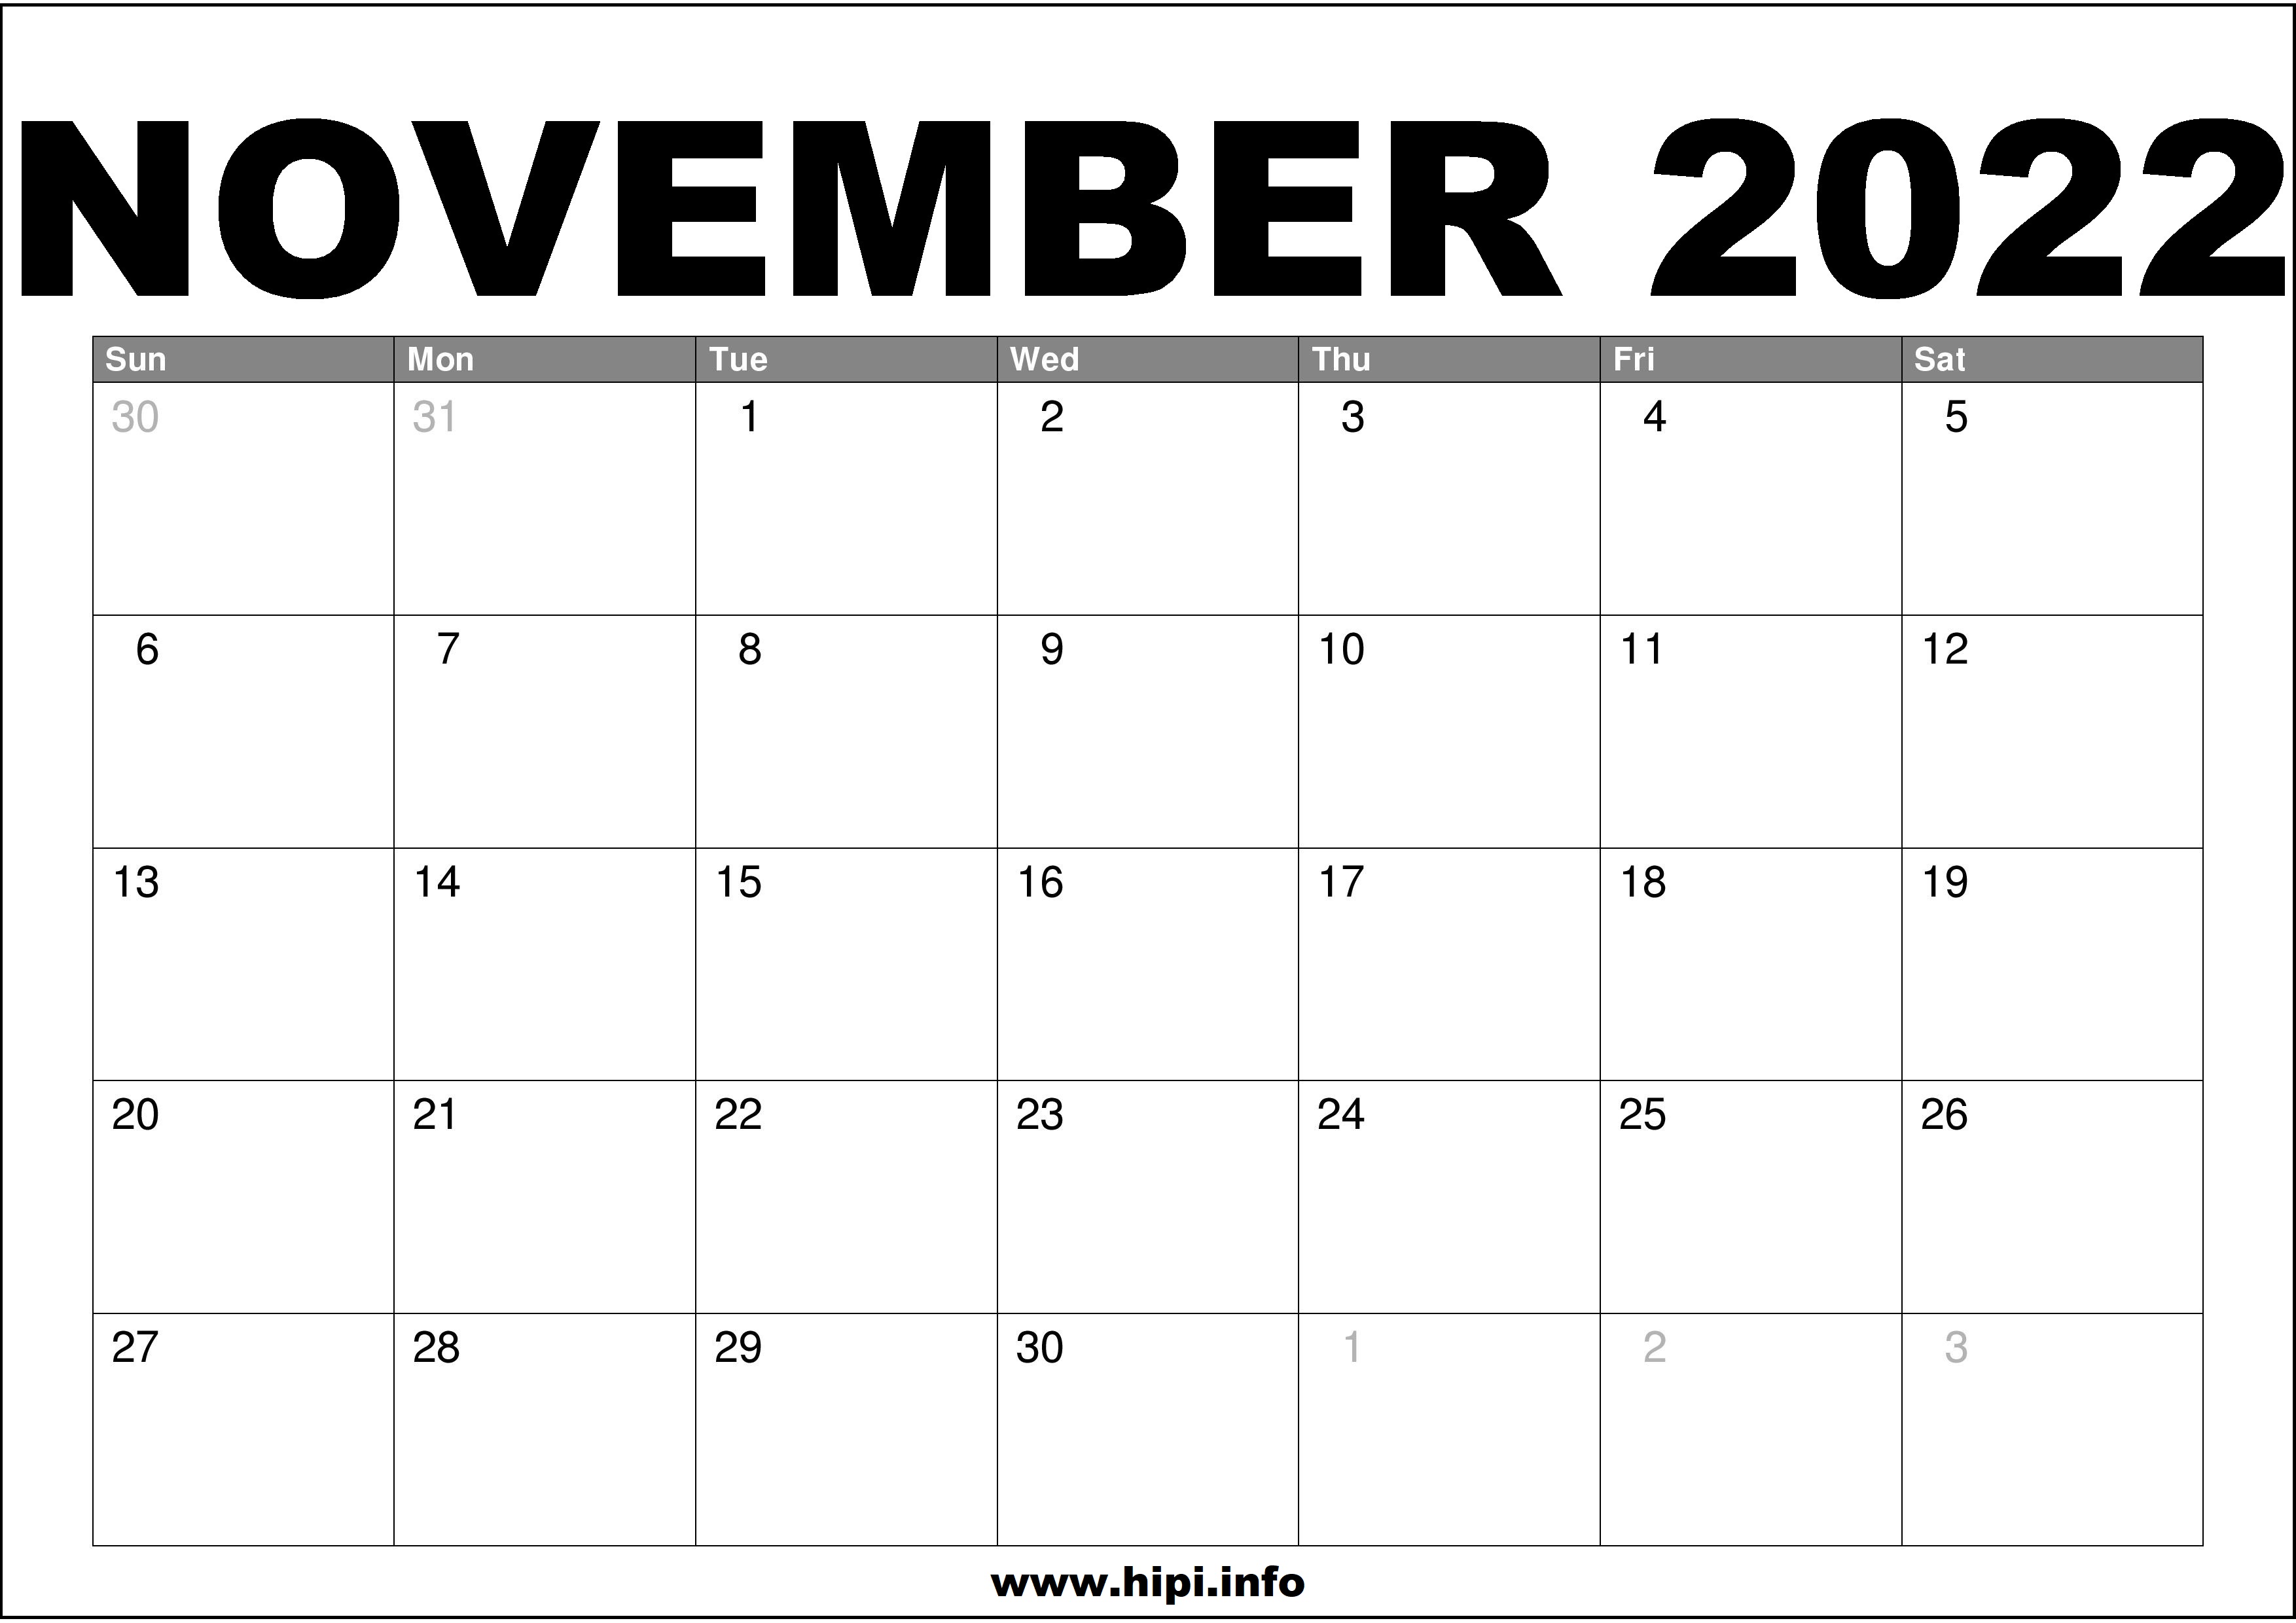 November Month Calendar 2022 November 2022 Calendar Printable Free - Hipi.info | Calendars Printable Free